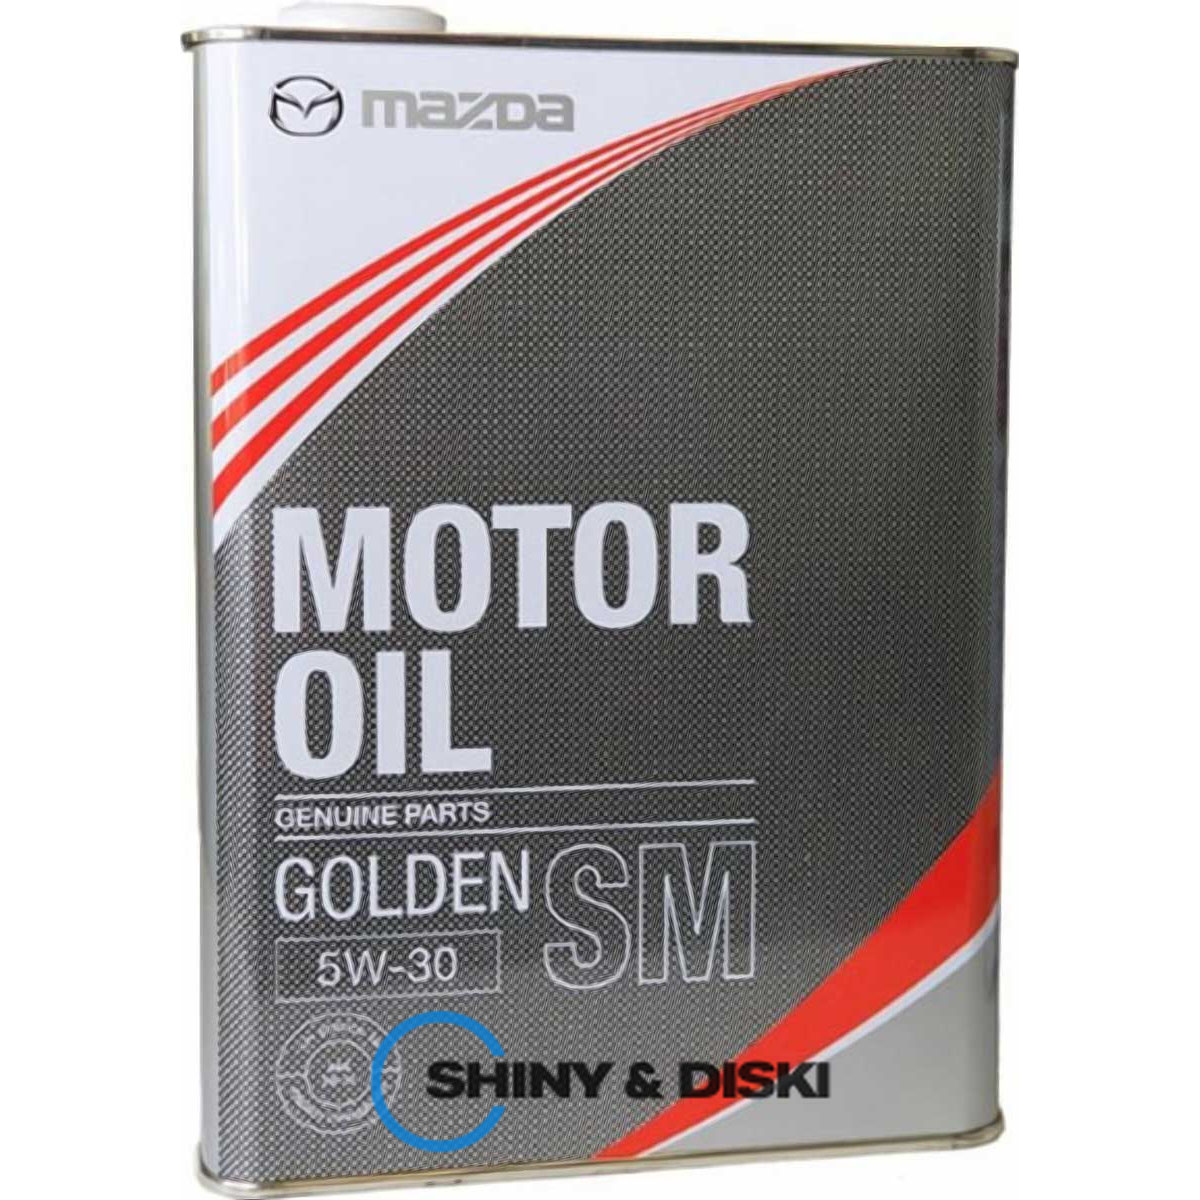 mazda golden motor oil sn/gf-5 5w-30 (4л)